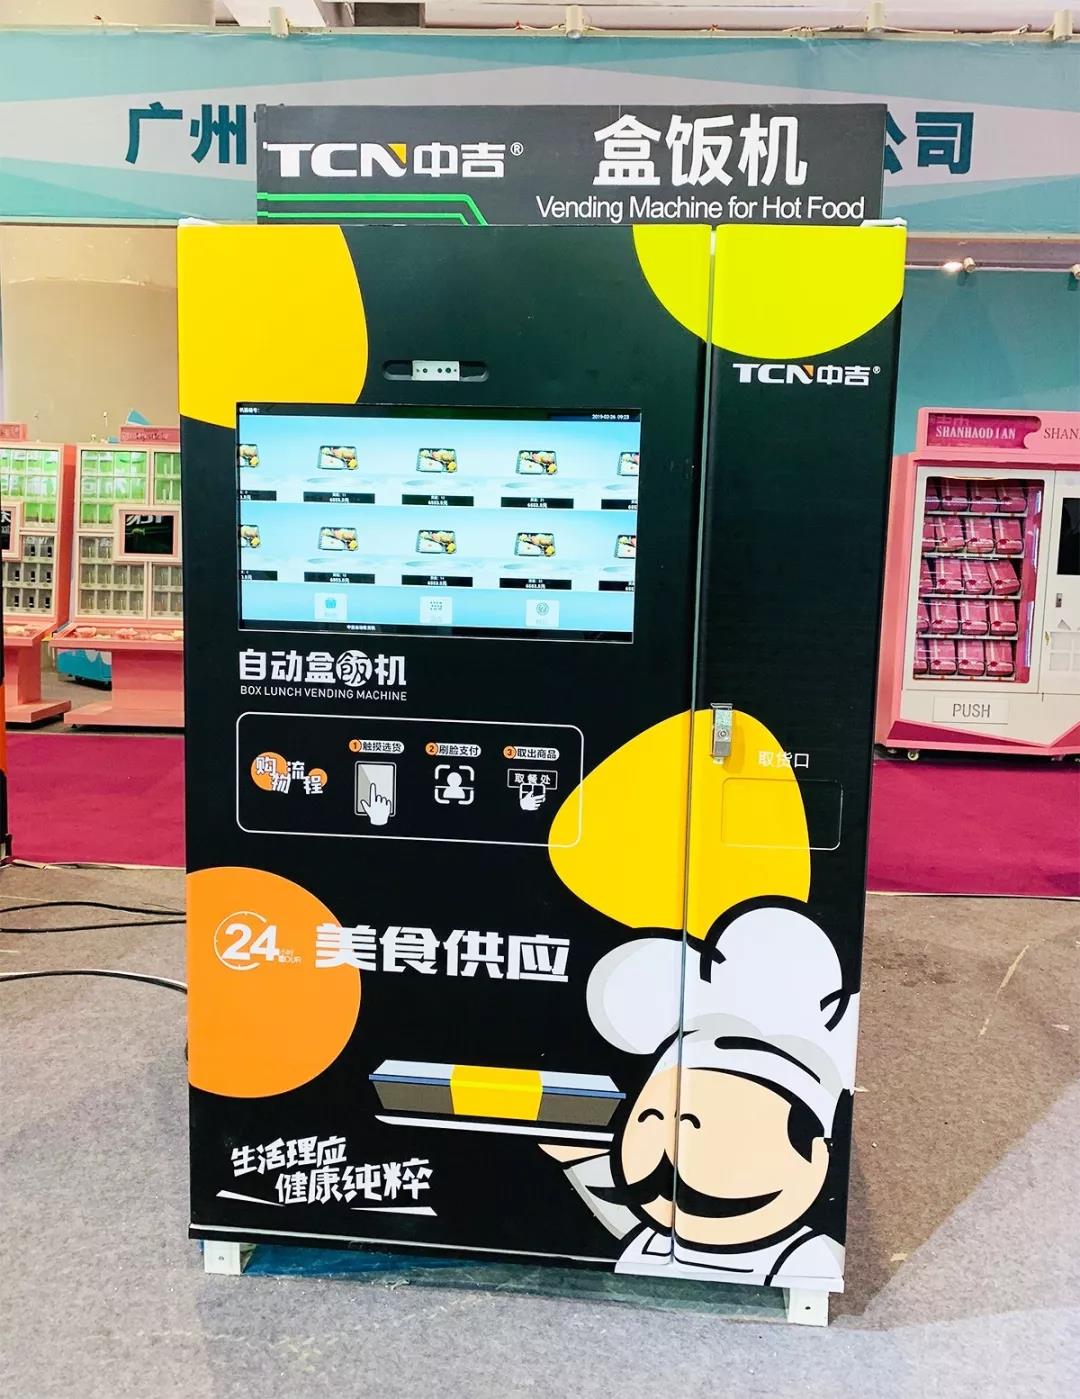 tcn vending machine